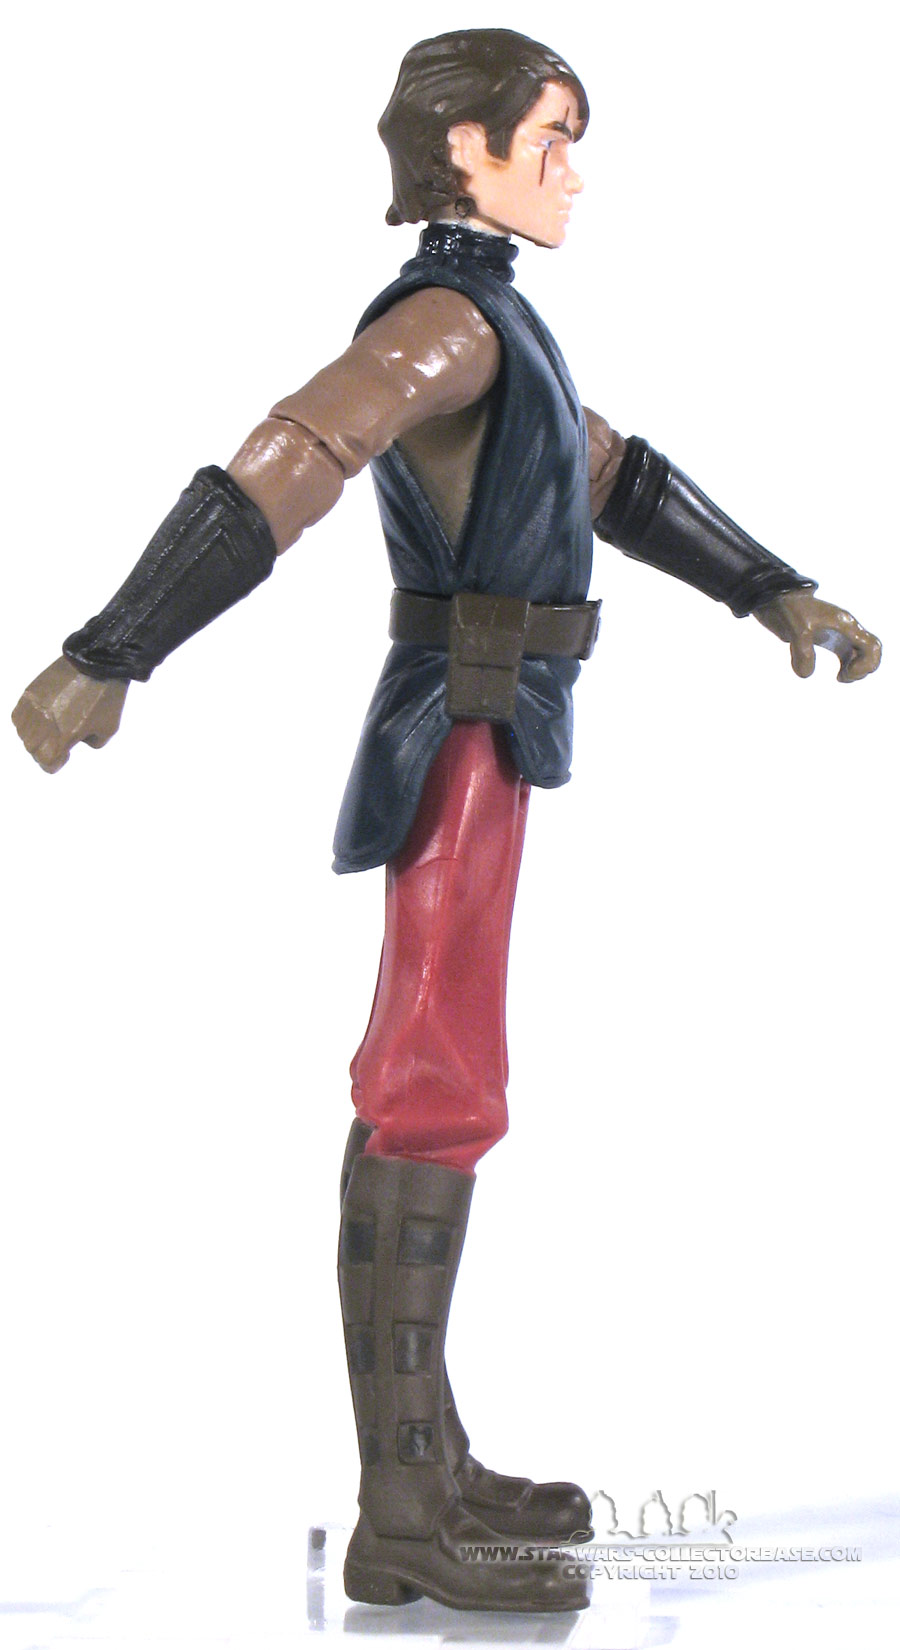 Naboo Star Skiff with Anakin Skywalker